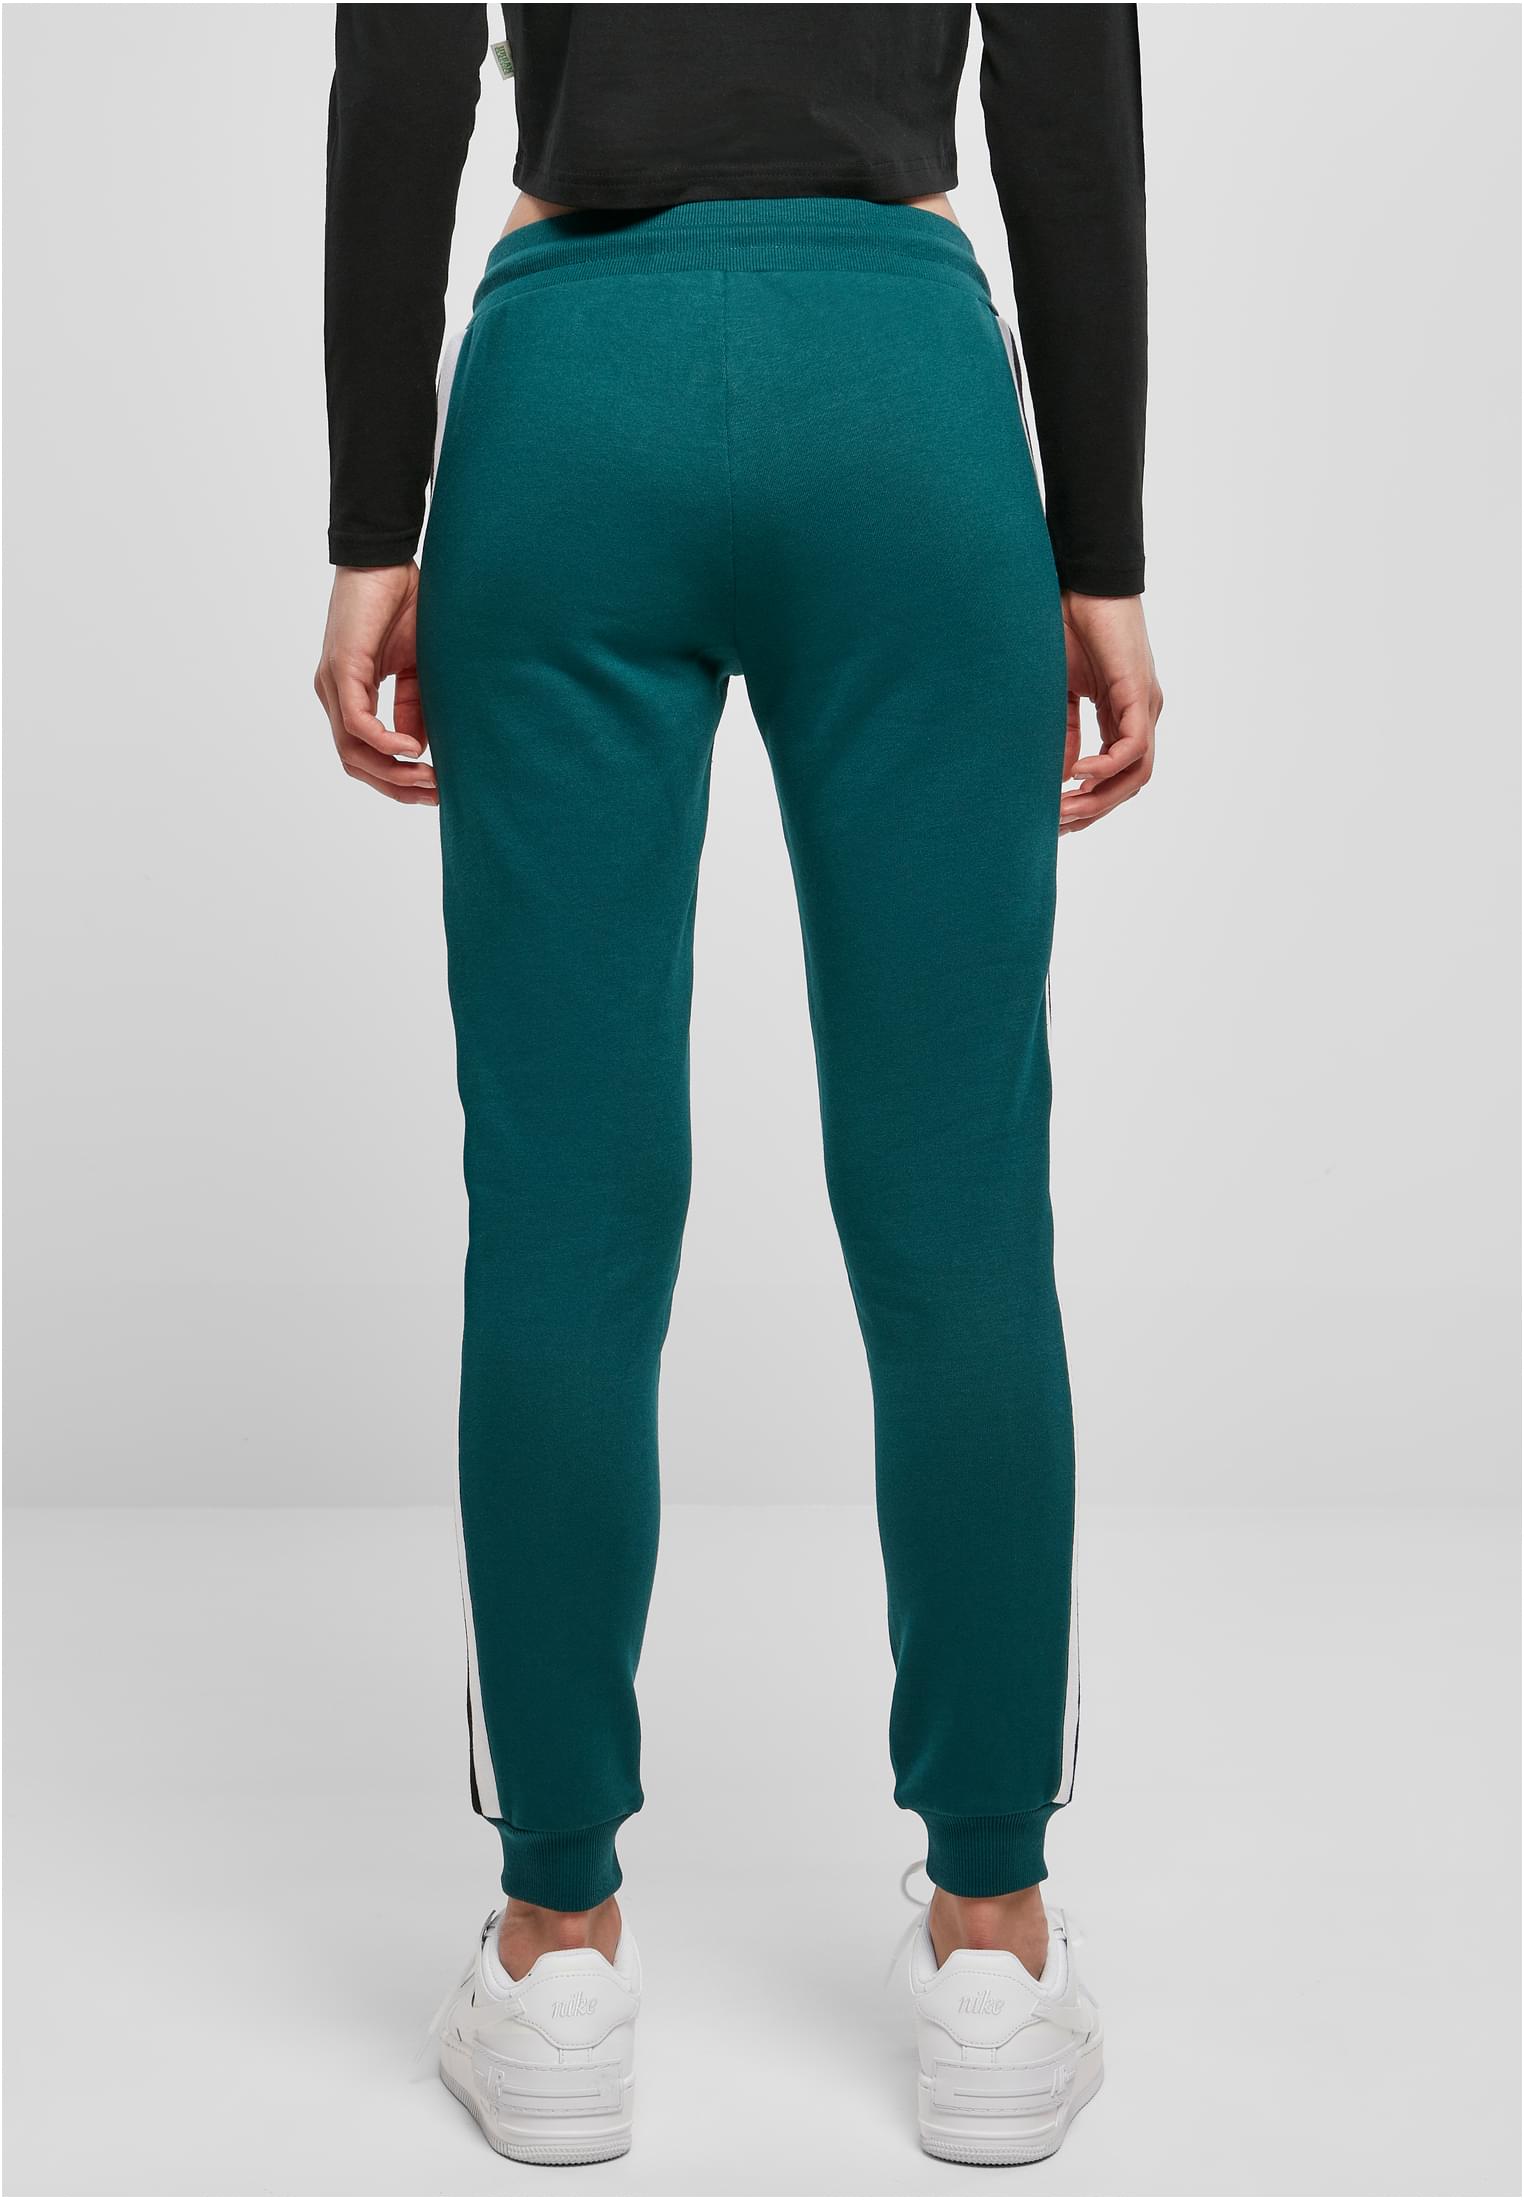 Damen Ladies College Contrast Sweatpants in Farbe jasper/white/black